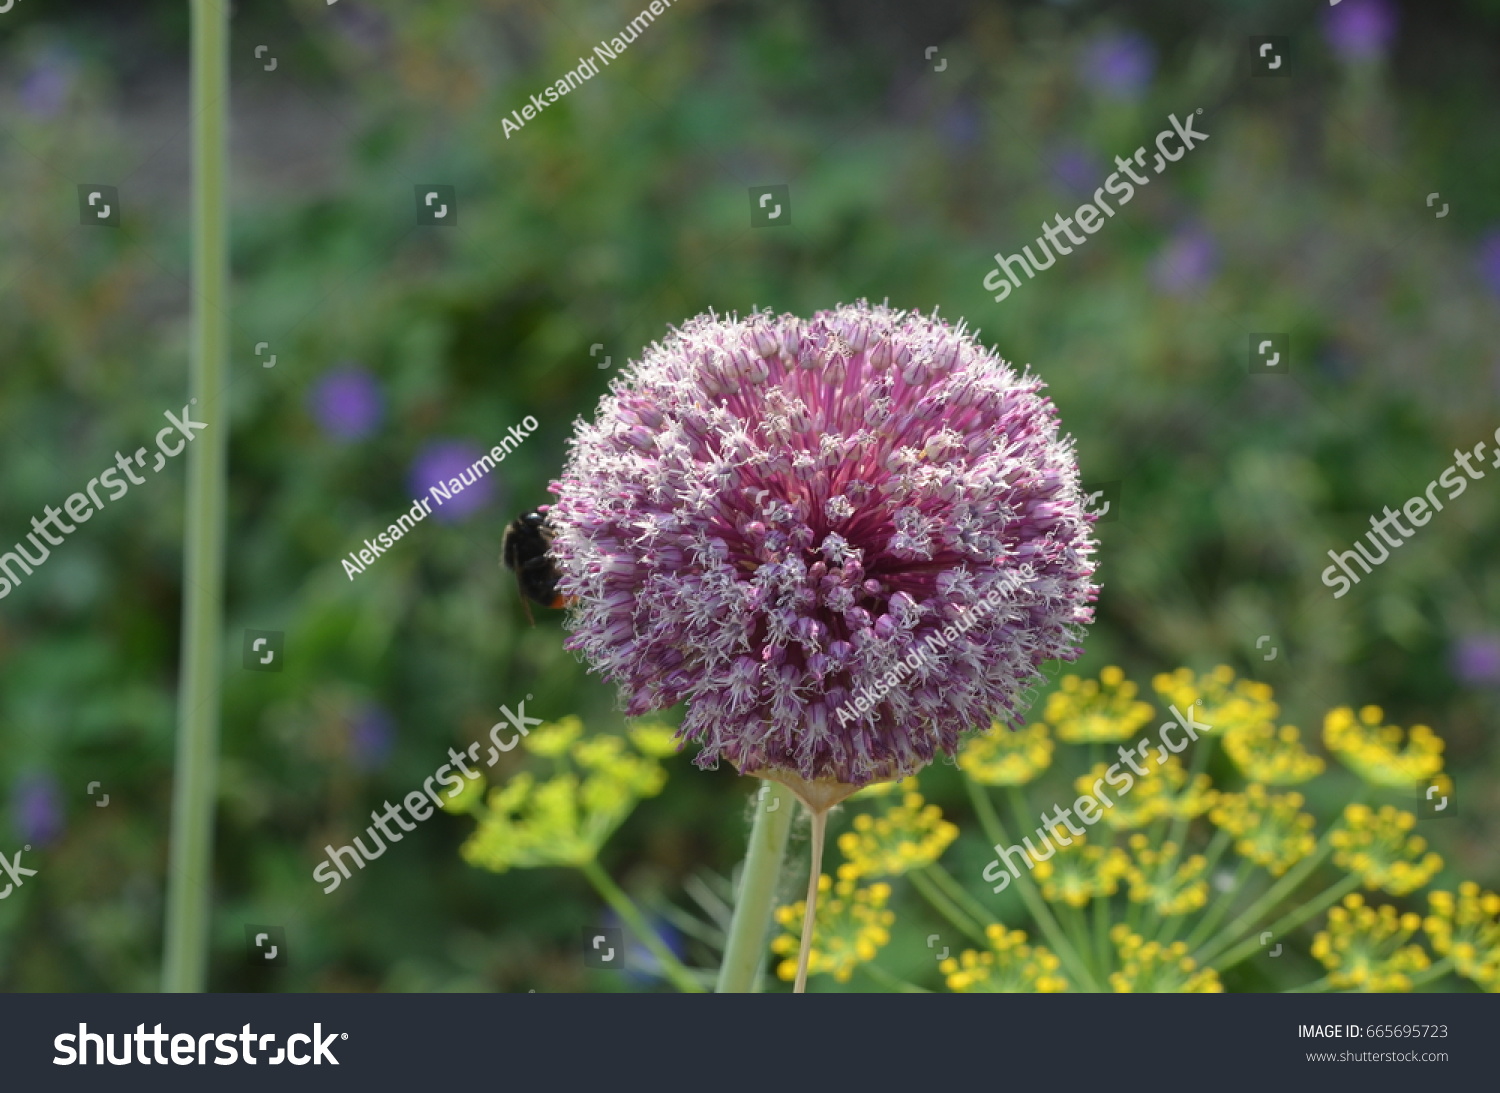 TÌNH YÊU CÂY CỎ ĐV 9 - Page 19 Stock-photo-pink-onion-allium-pseudoampeloprasum-from-armenia-with-bumblebee-665695723